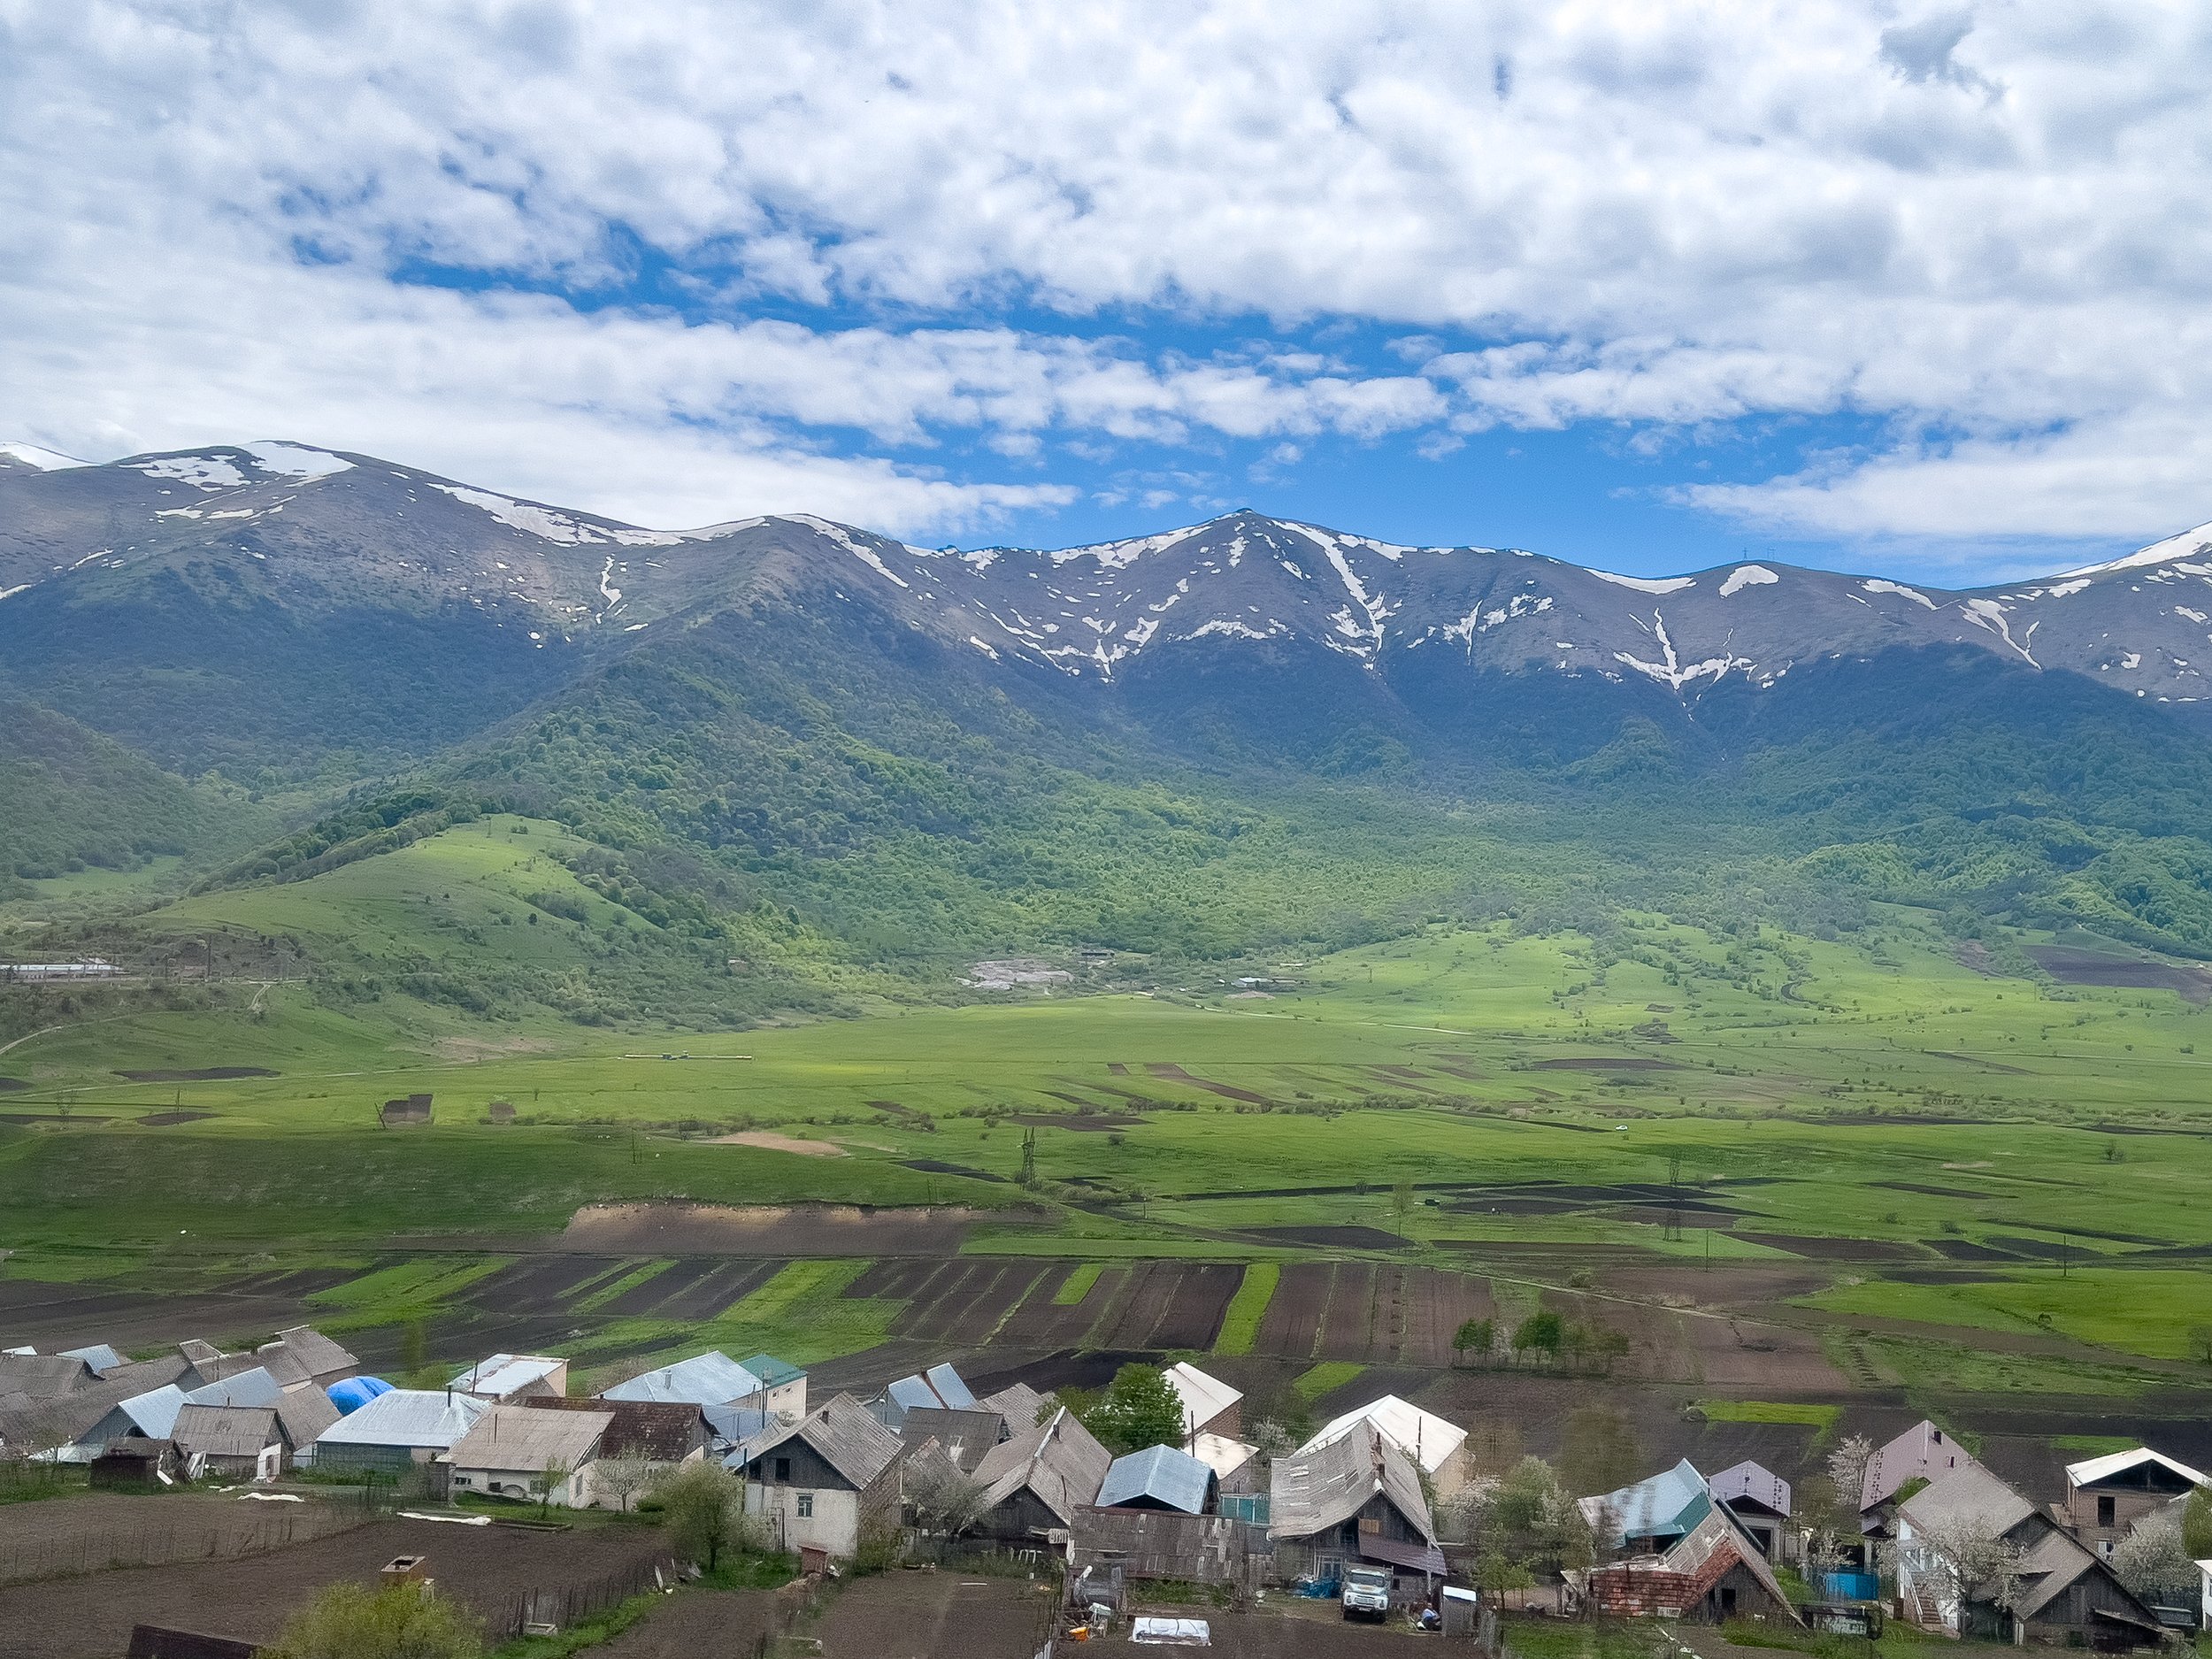 Fioletovo Village, between Gyumri and Dilijan, Armenia